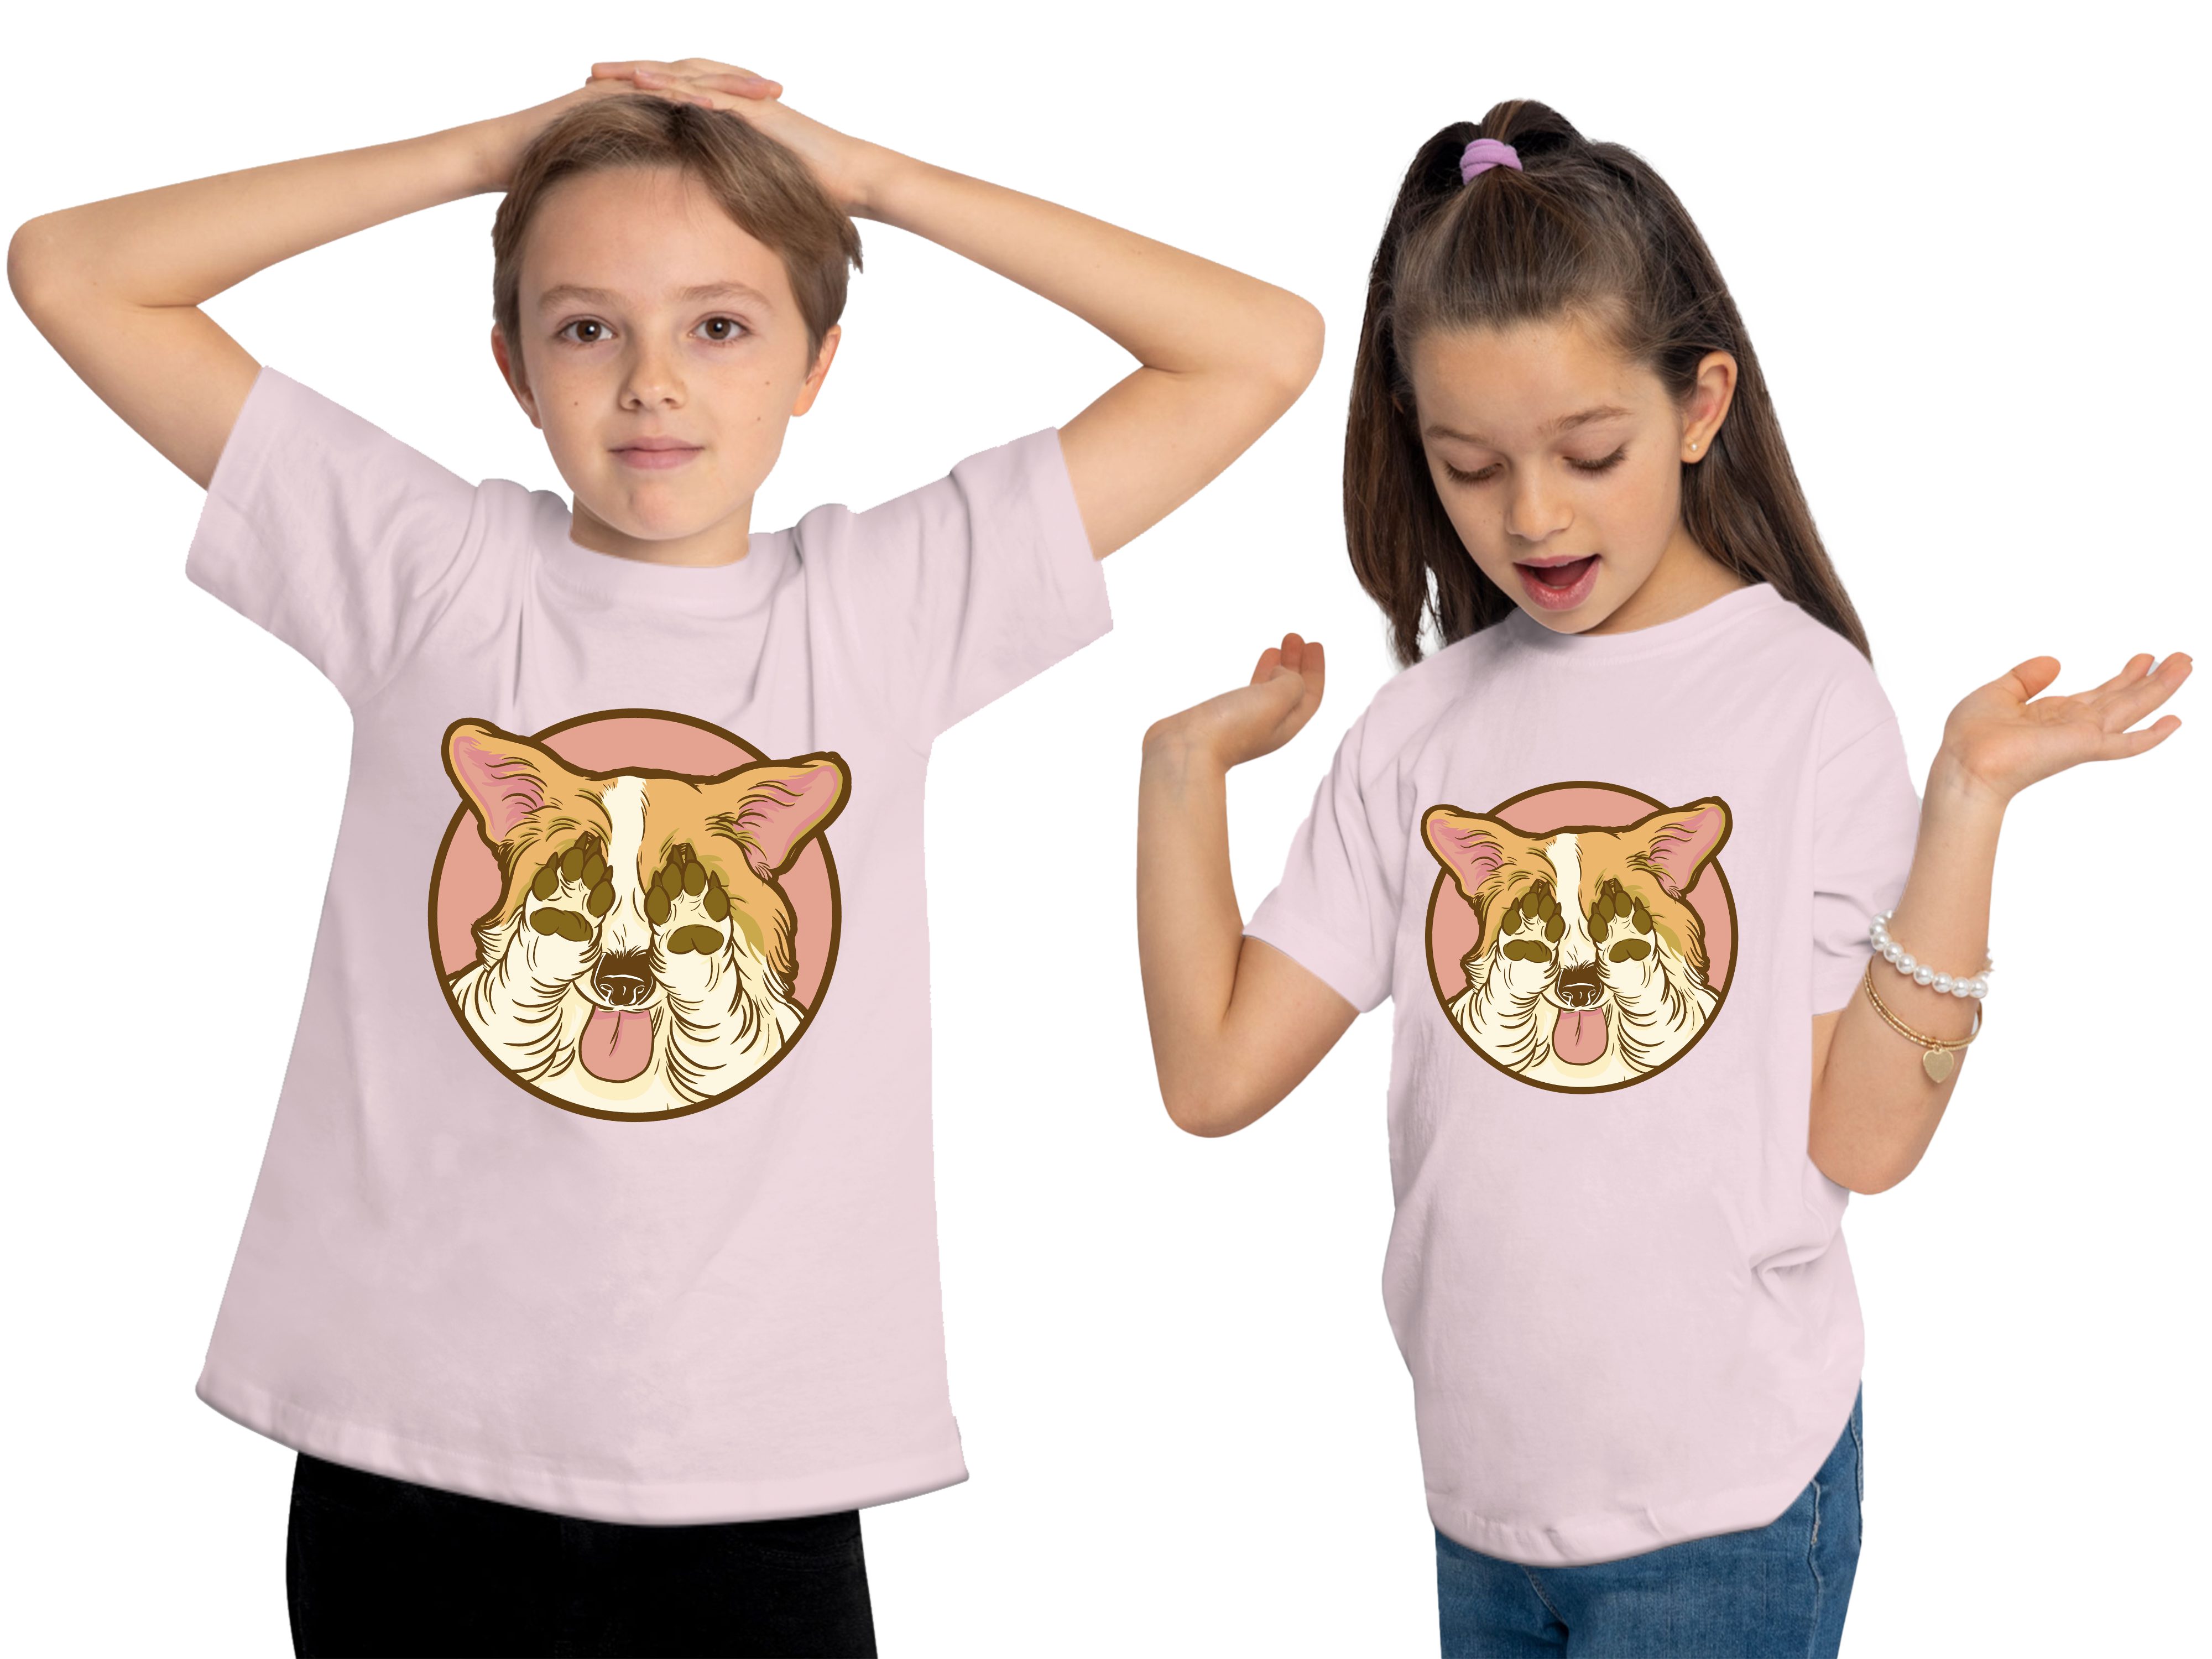 zu Augen mit Corgi Hunde - i226 seine Kinder rosa hält Print-Shirt MyDesign24 Baumwollshirt bedrucktes der Aufdruck, T-Shirt